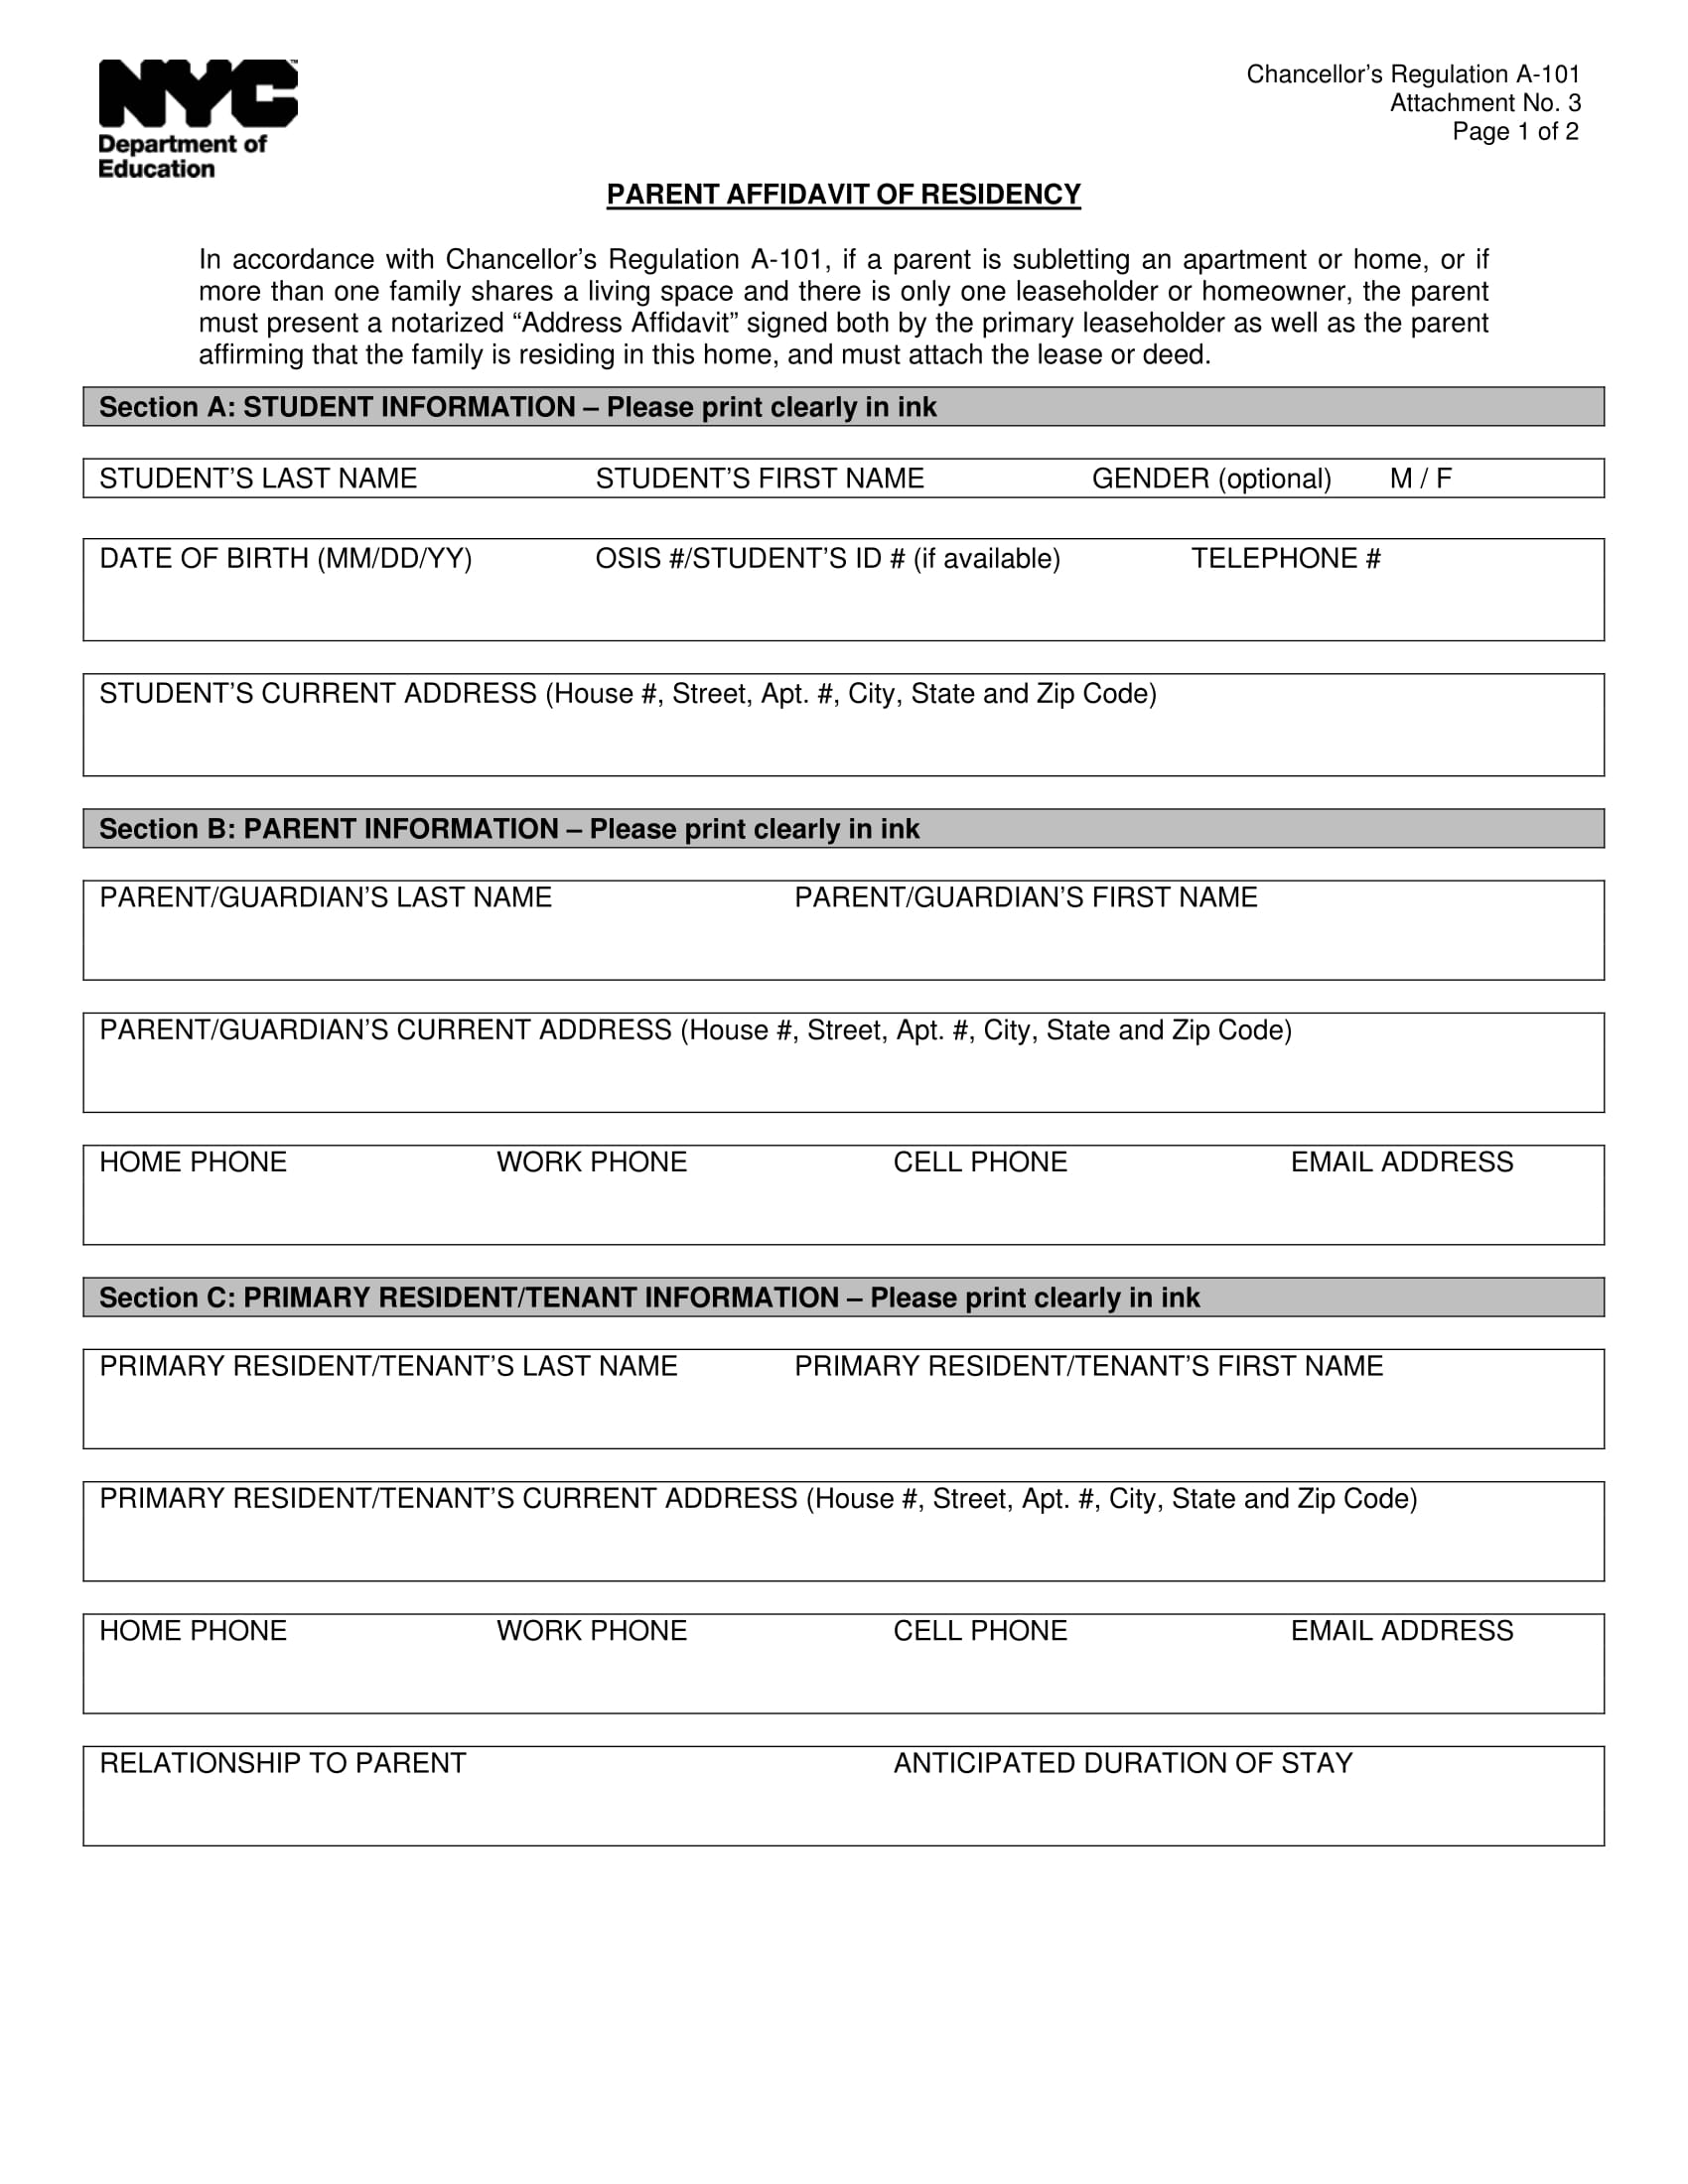 parent affidavit of residency form 1